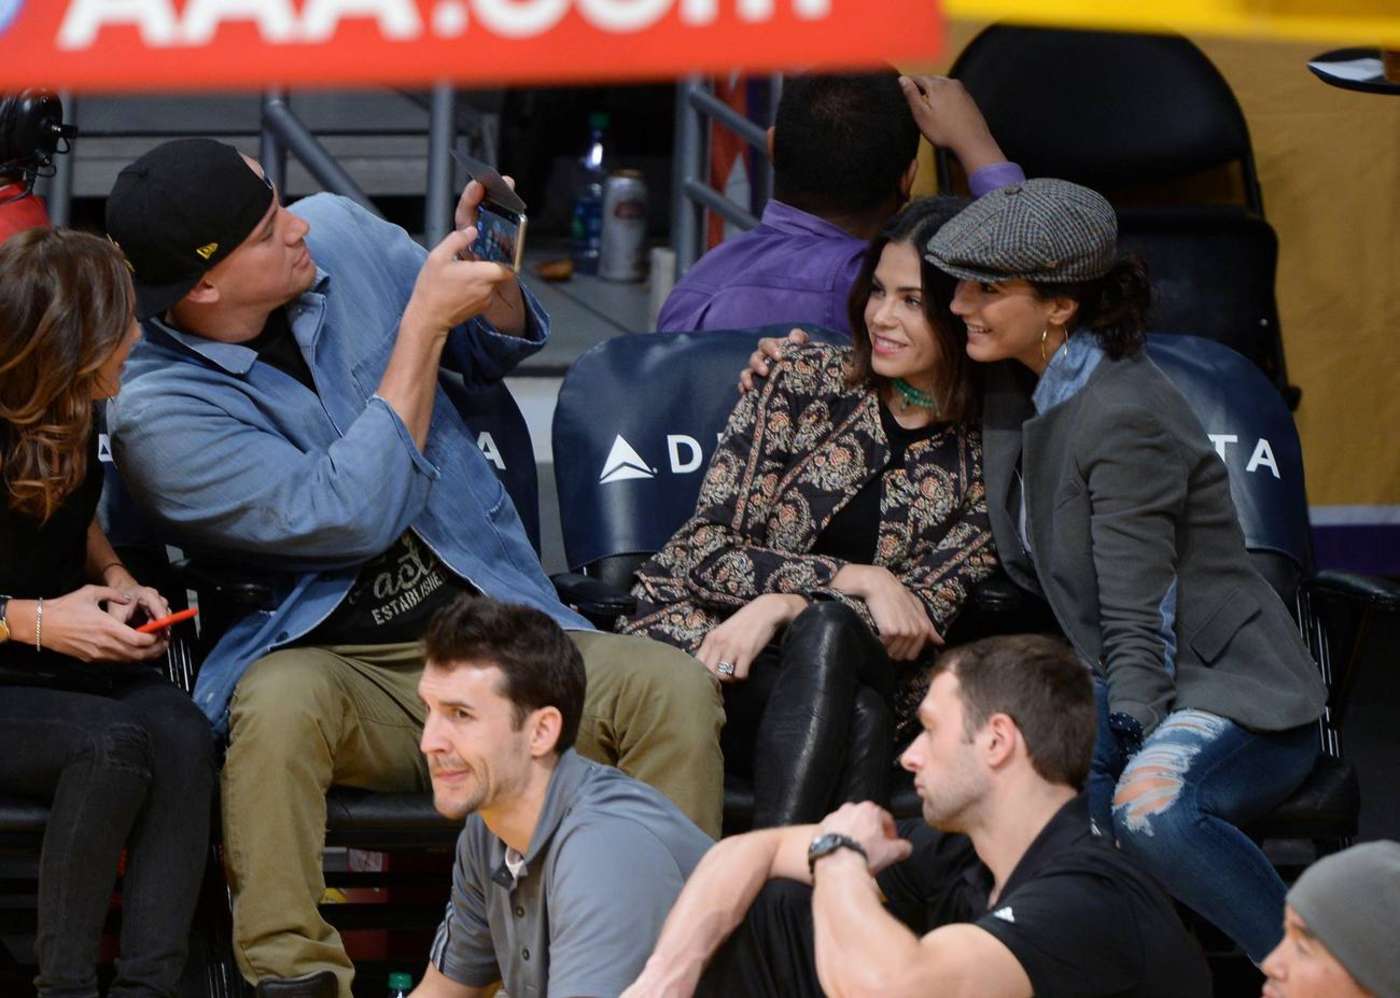 Jenna Dewan Tatum 2015 : Channing Tatum Jenna Dewan and Emmanuelle Chriqui Watch Lakers Game -03